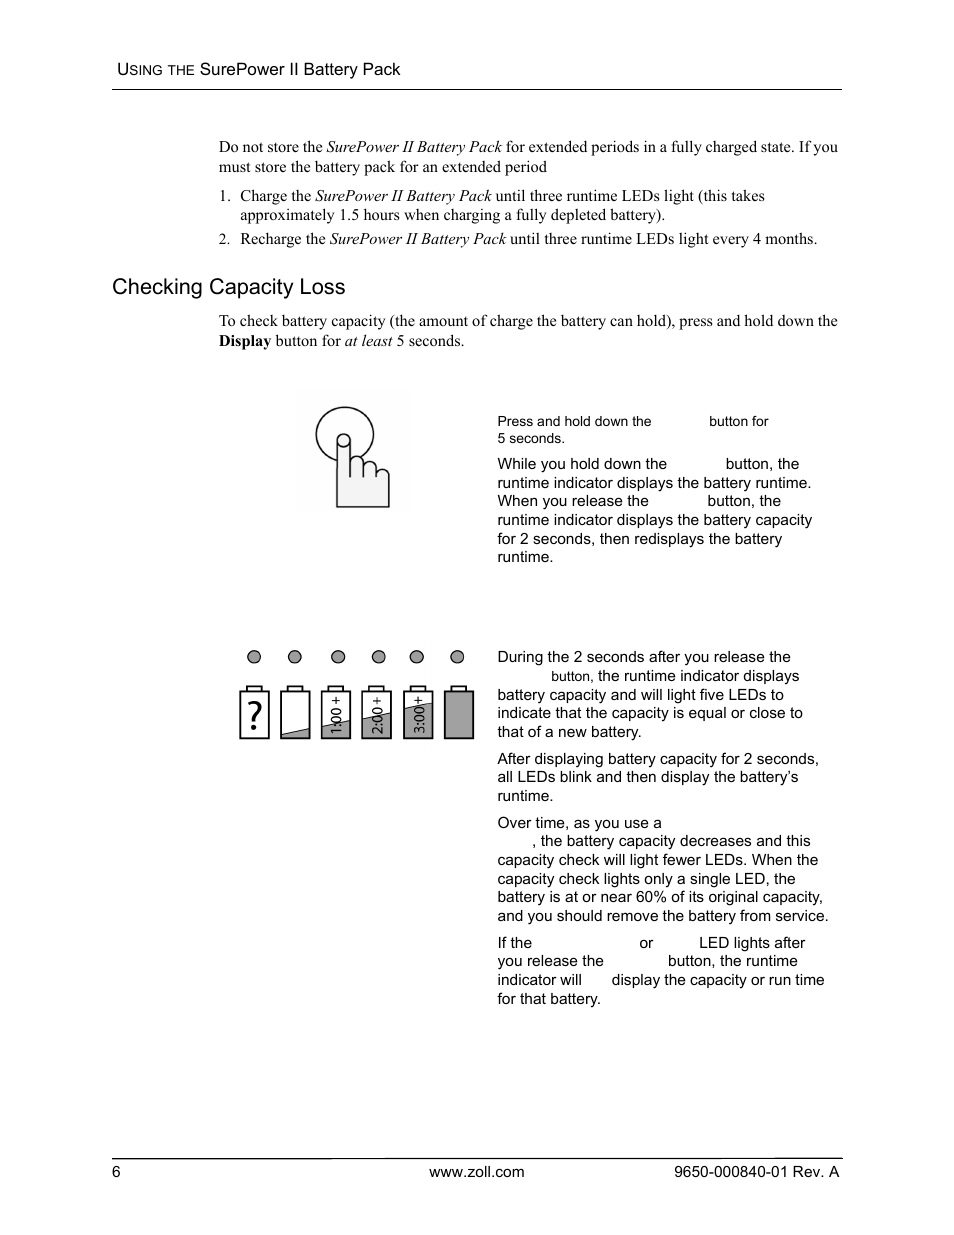 Checking capacity loss | ZOLL X Series Monitor Defibrillator Rev A User Manual | Page 8 / 10